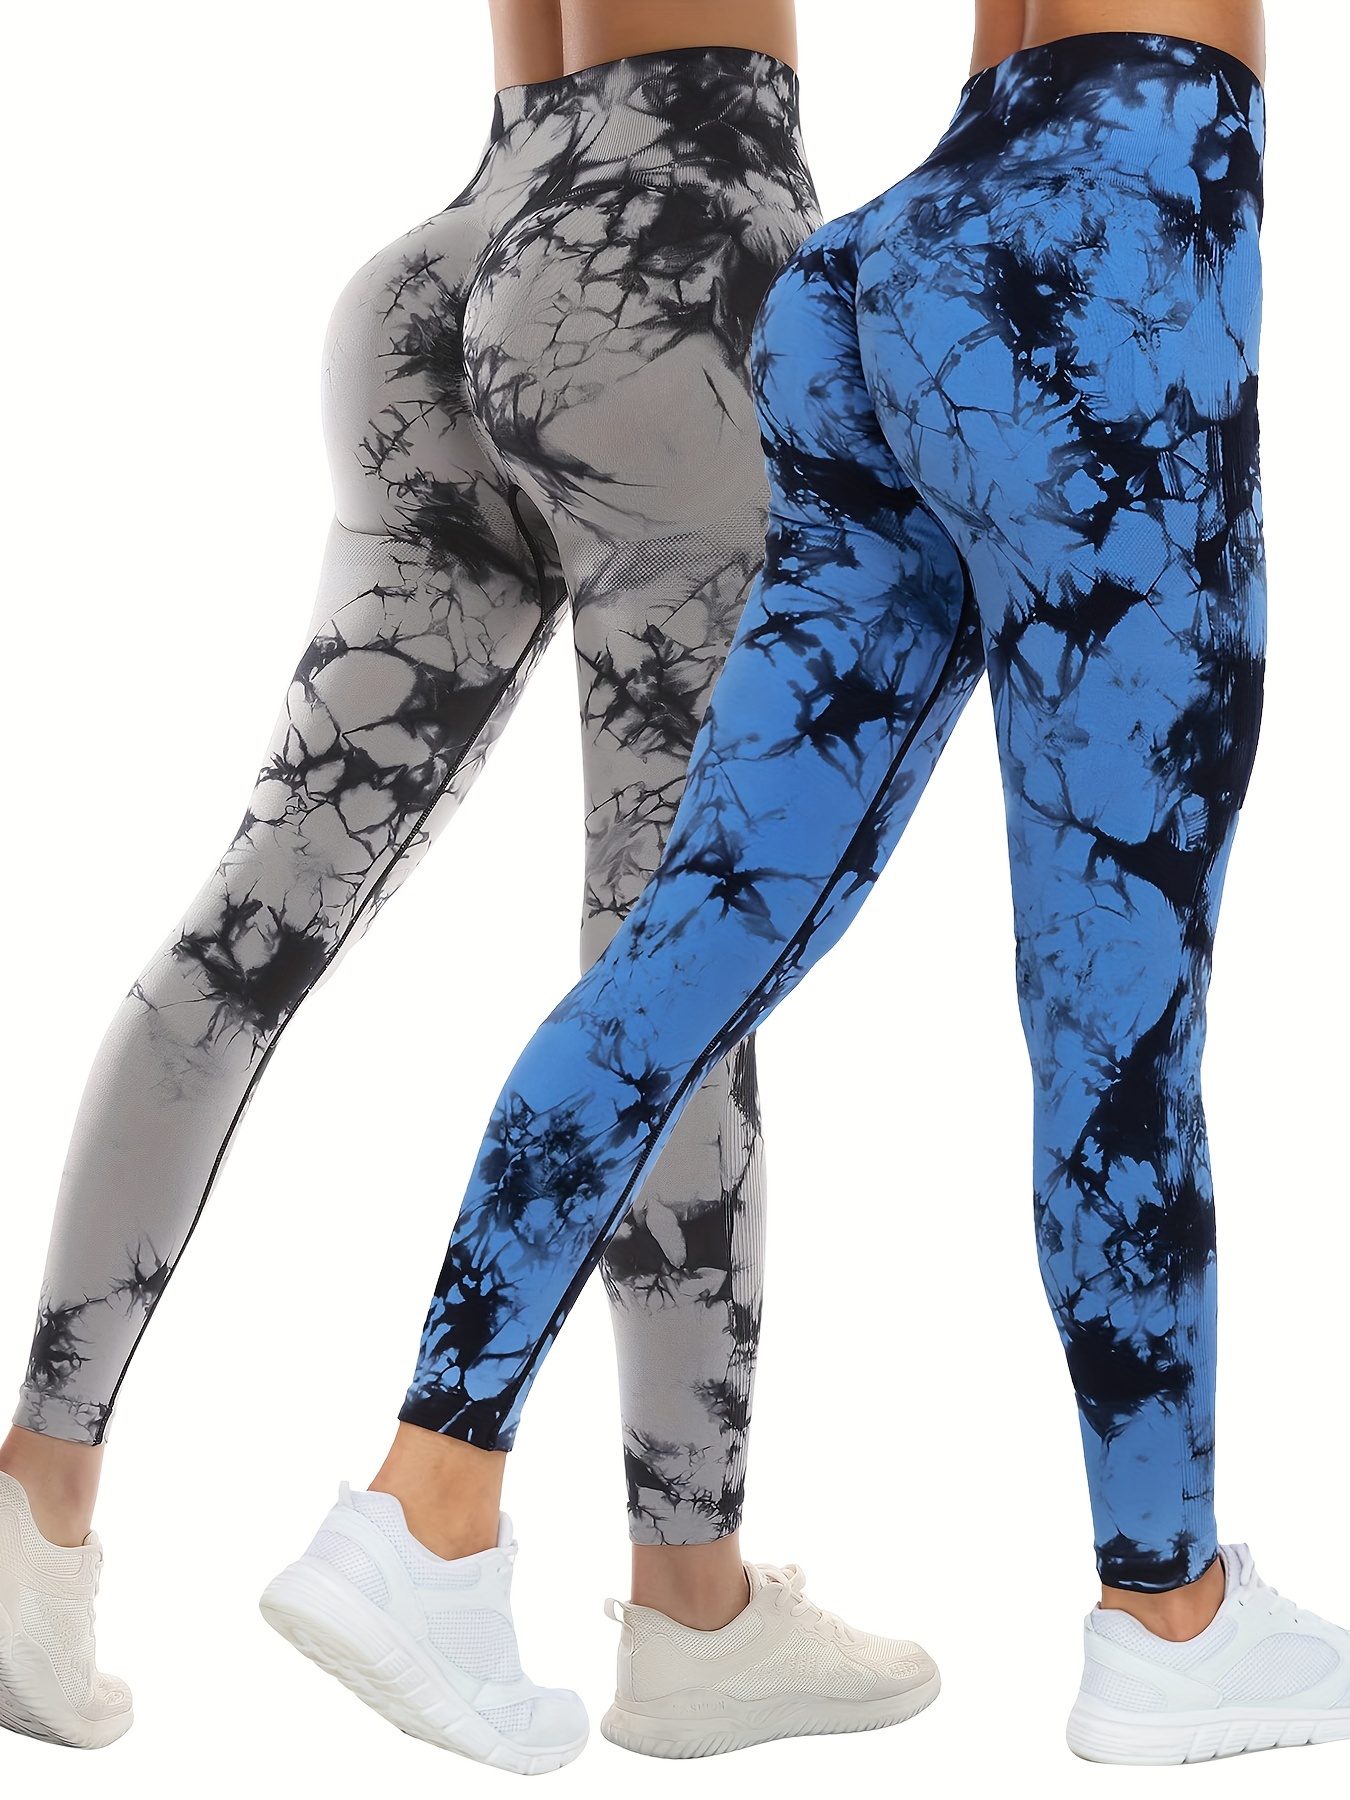 Shop Generic Marbling Tie_Dye Yoga Pants Sports Leggings Women